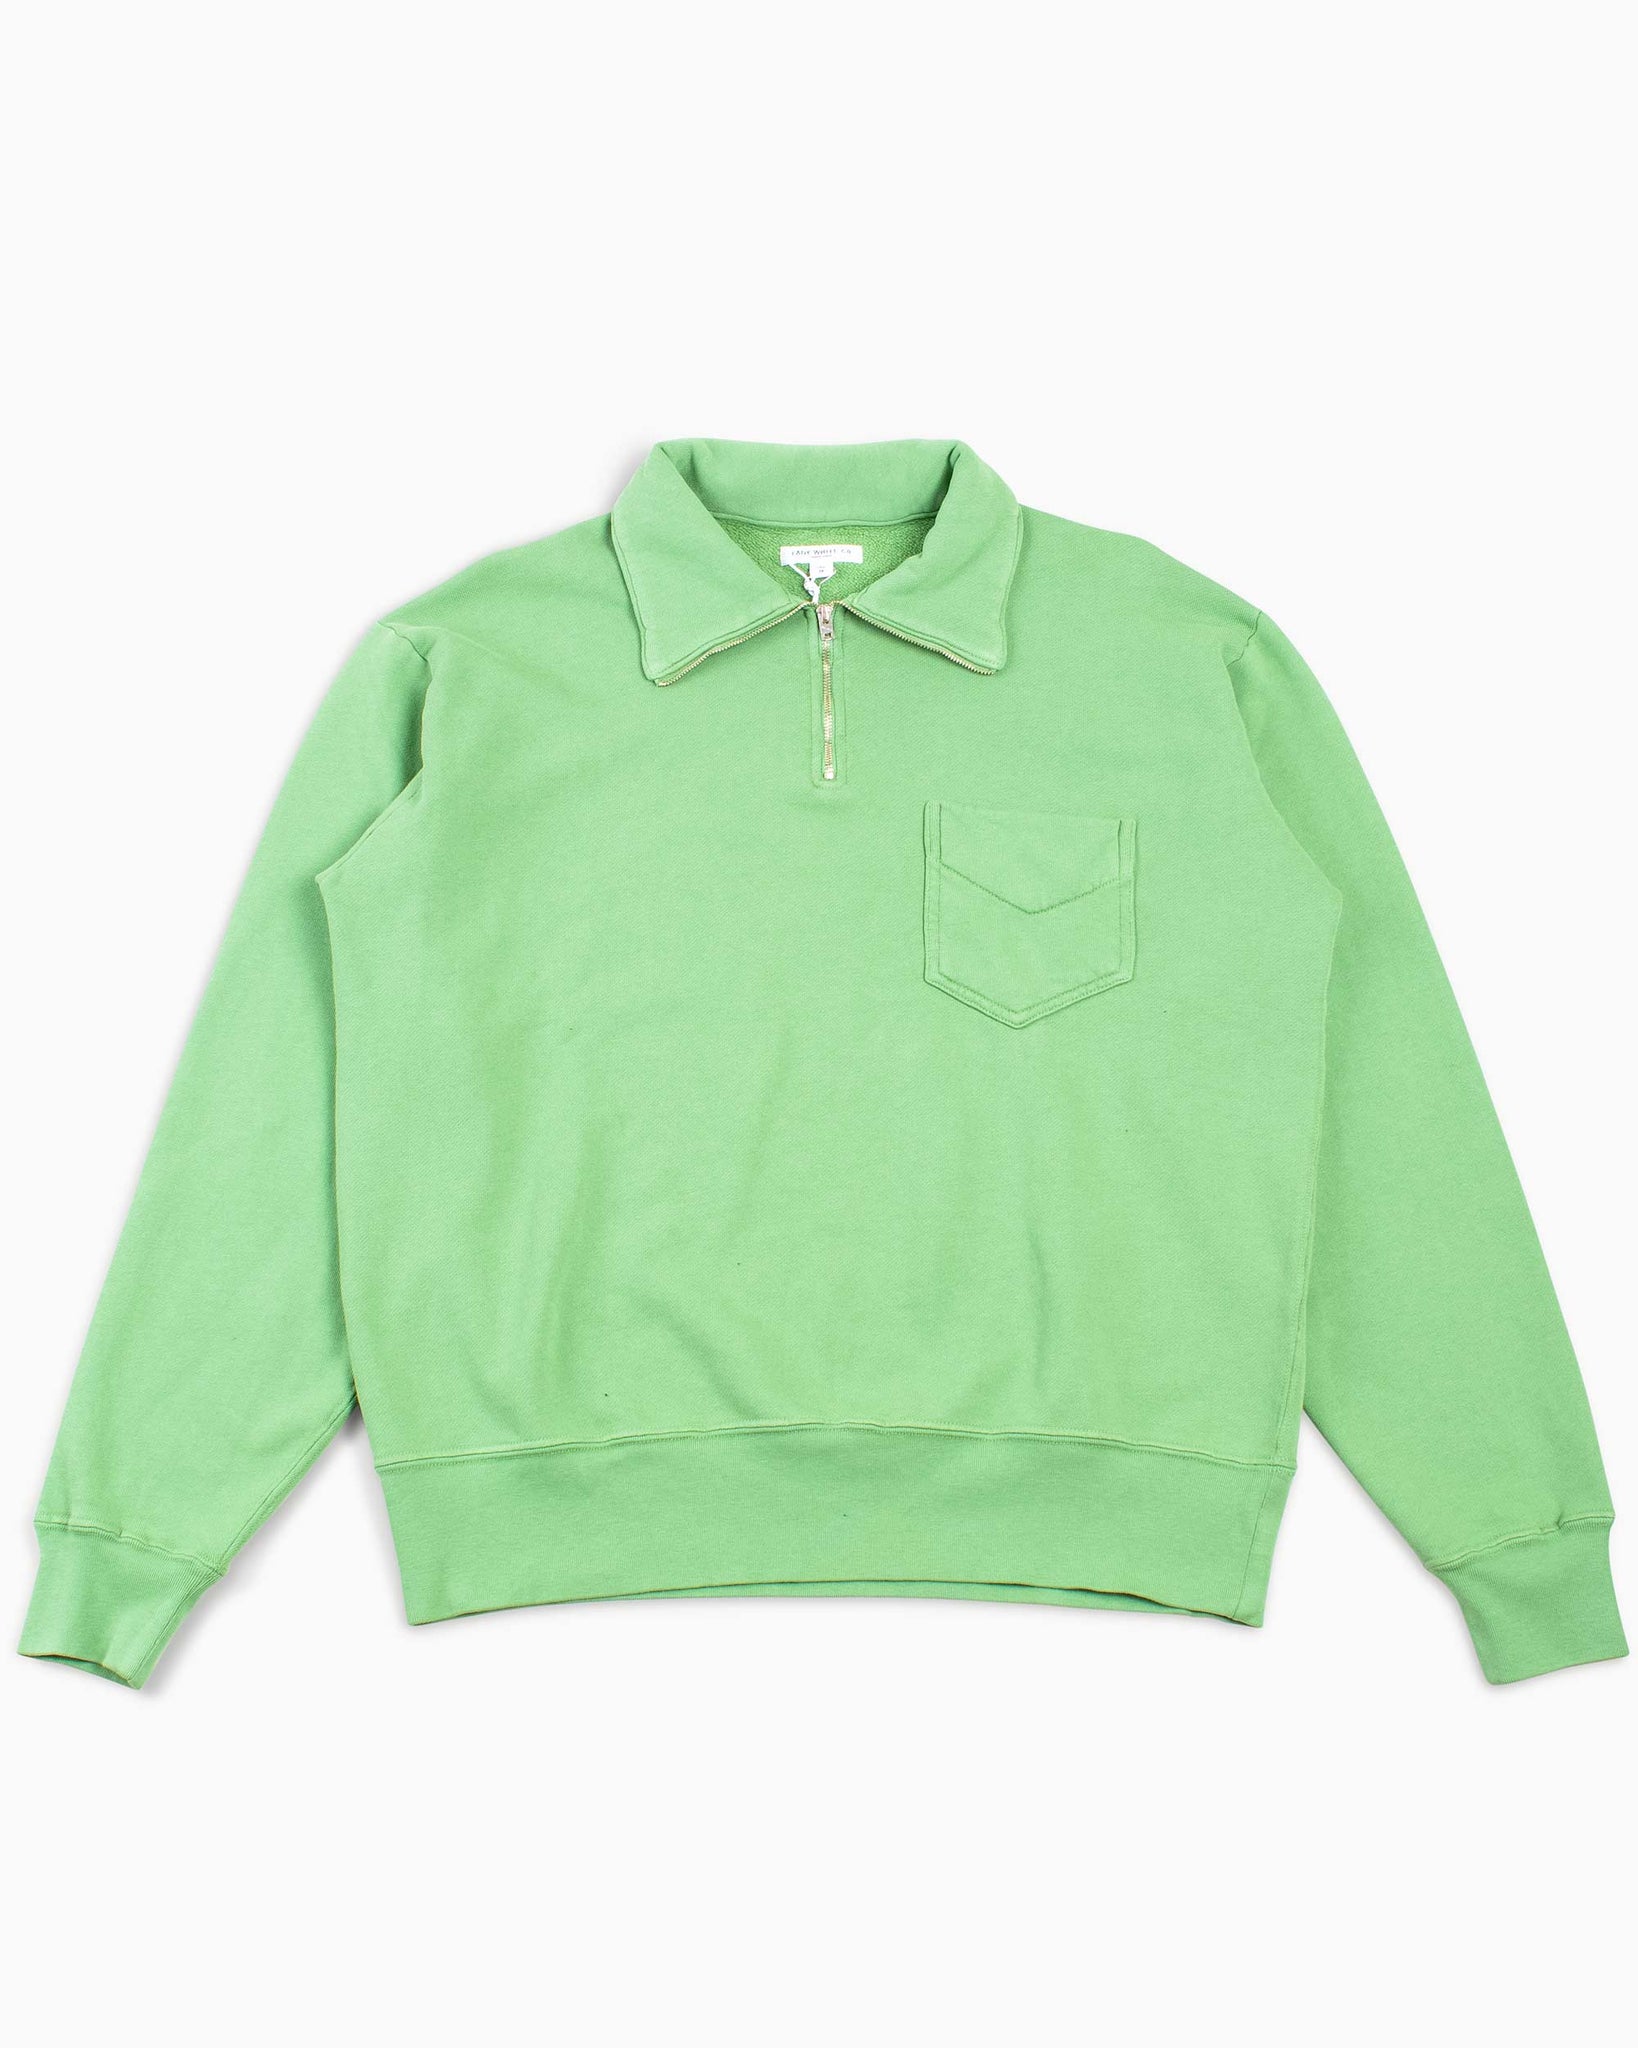 Lady White Co. Quarter Zip Sweatshirt Faded Green